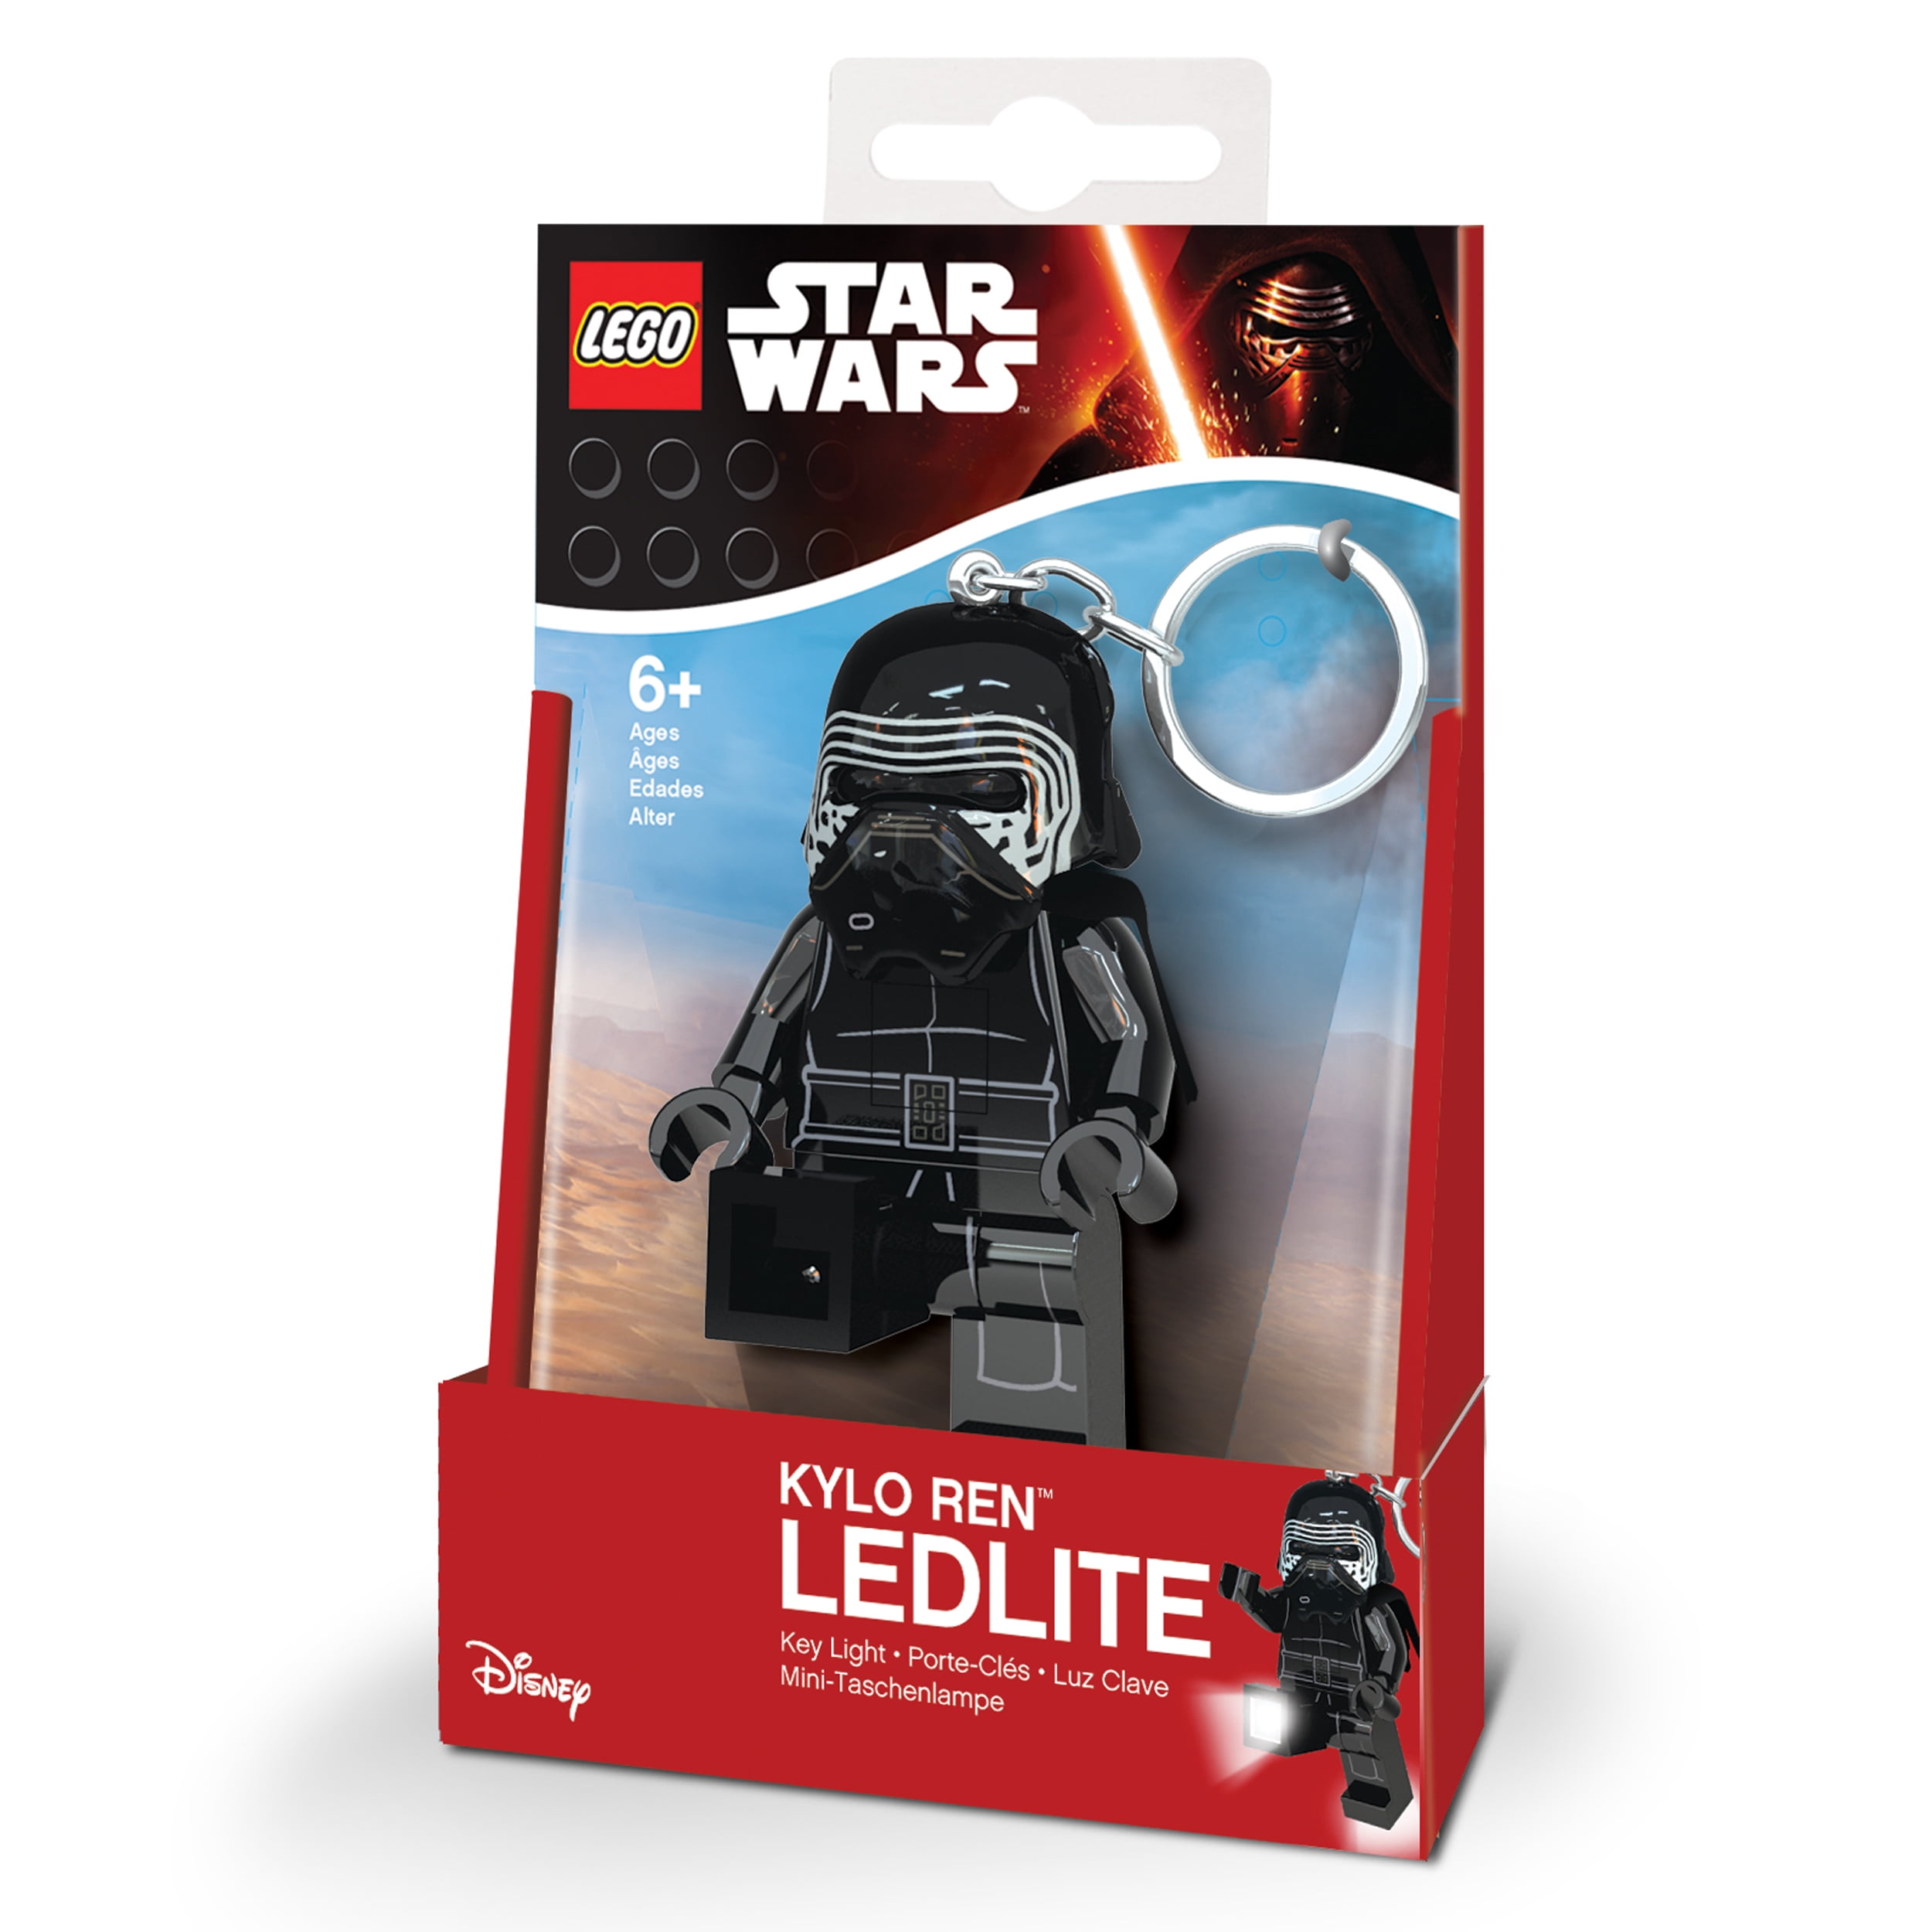 LEGO Star Wars Princess Leia Key Light with Blaster Lego Star Wars Toy 